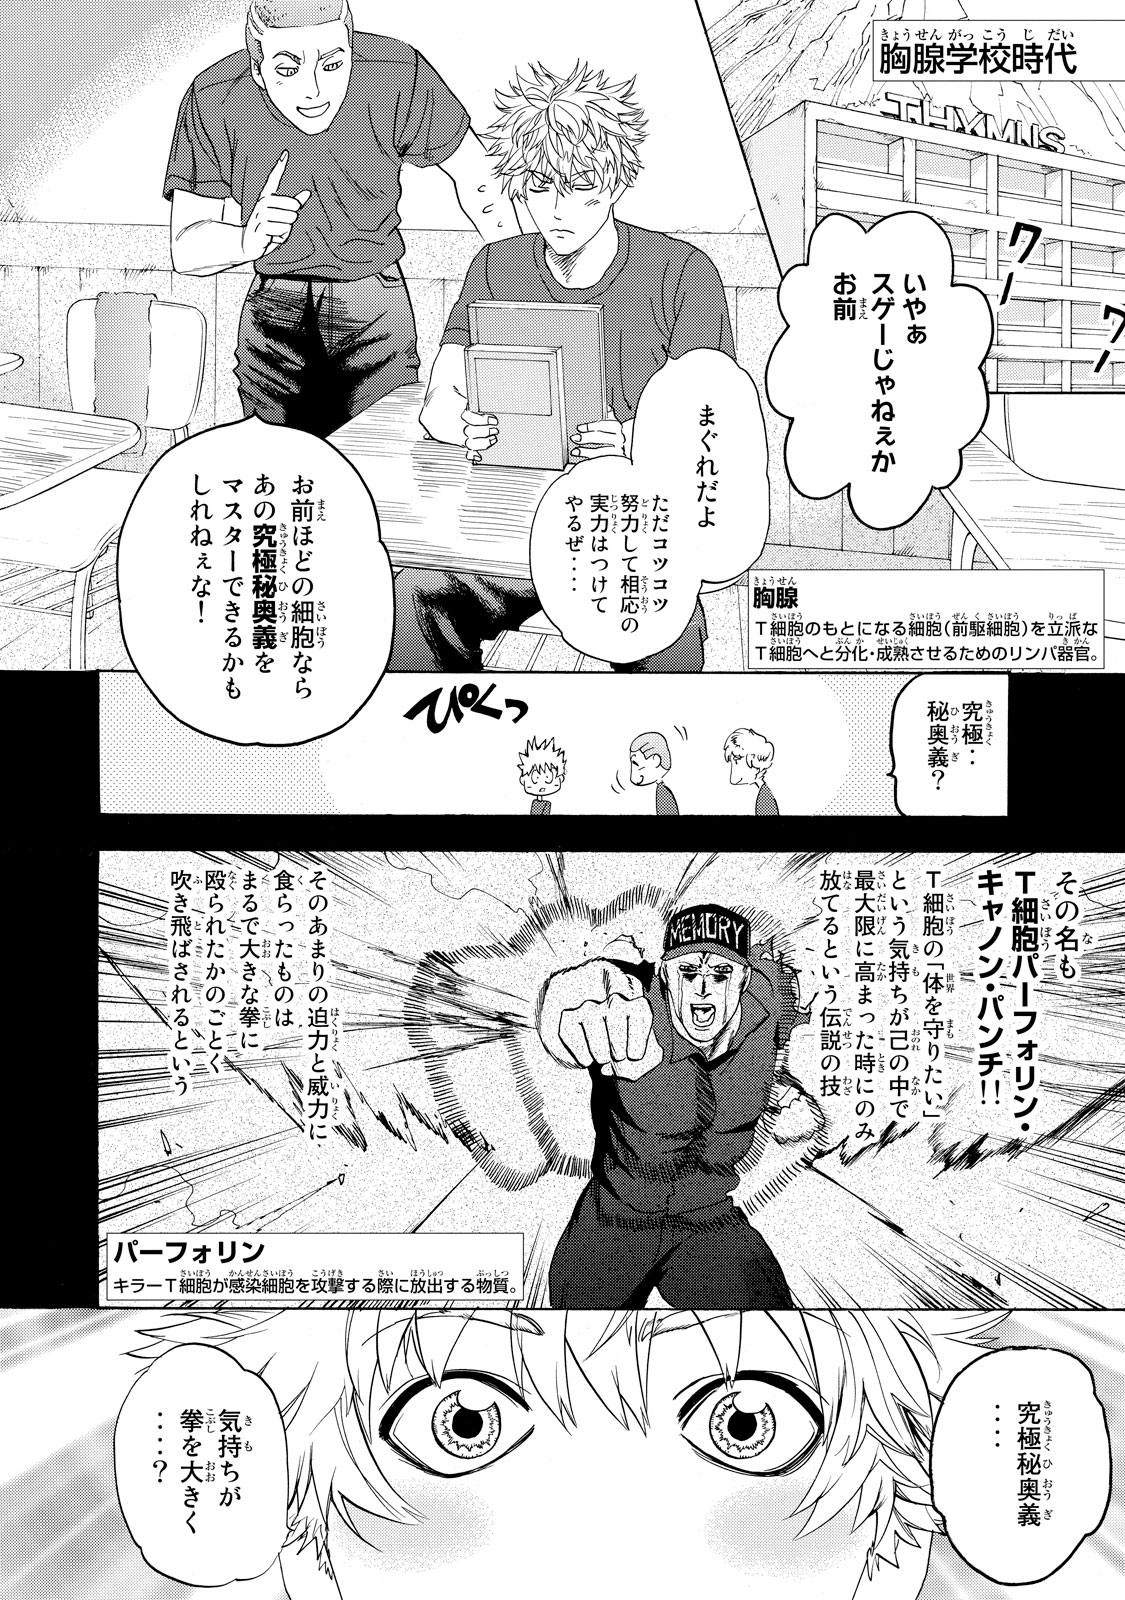 Hataraku Saibou - Chapter 25 - Page 22